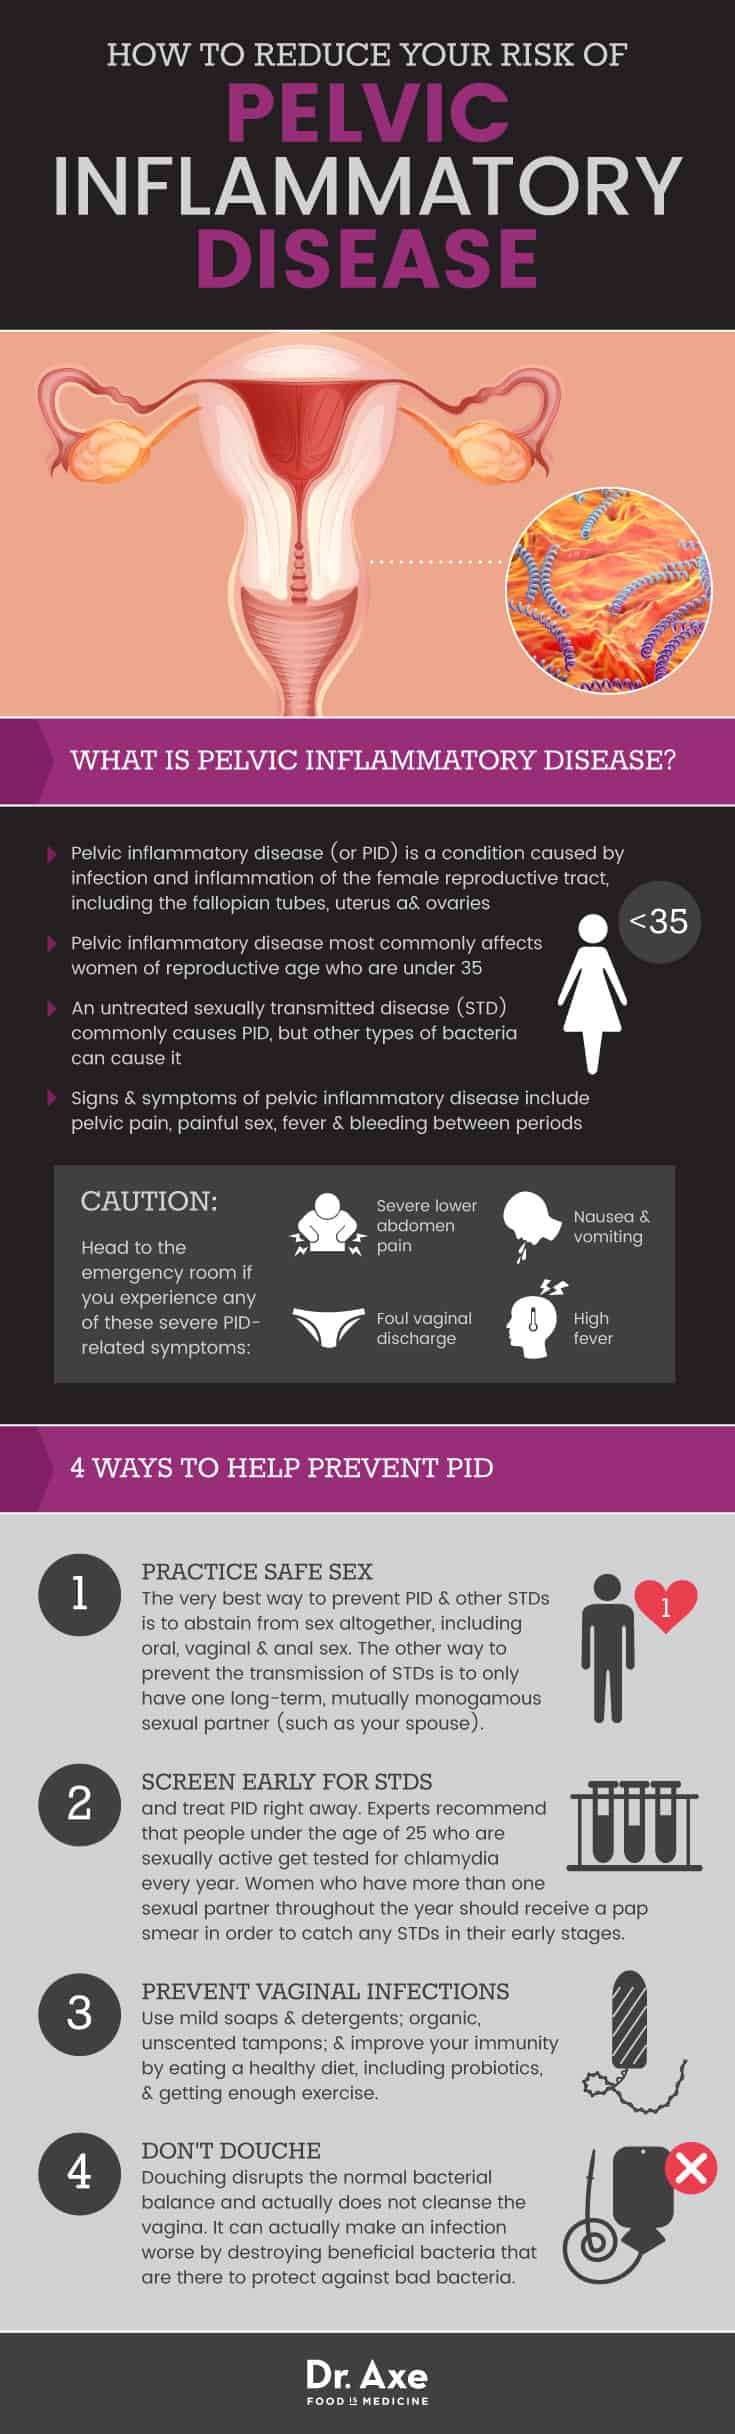 Reduce risk of pelvic inflammatory disease - Dr. Axe